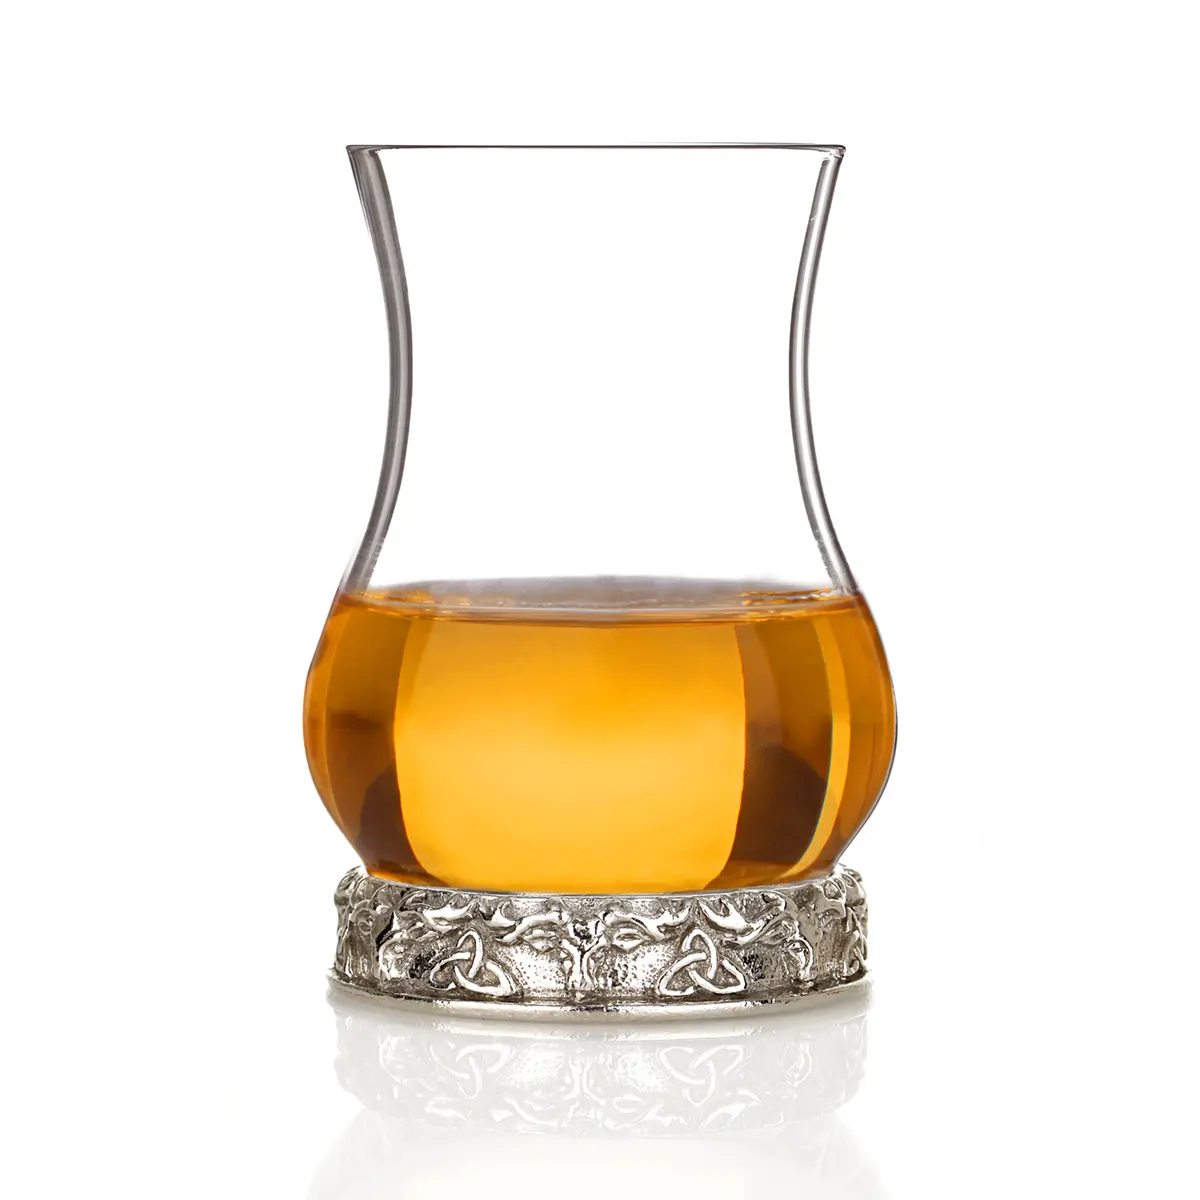 Highland Stag Whisky Tasting Glas - Handgefertigtes Whiskyglas aus England